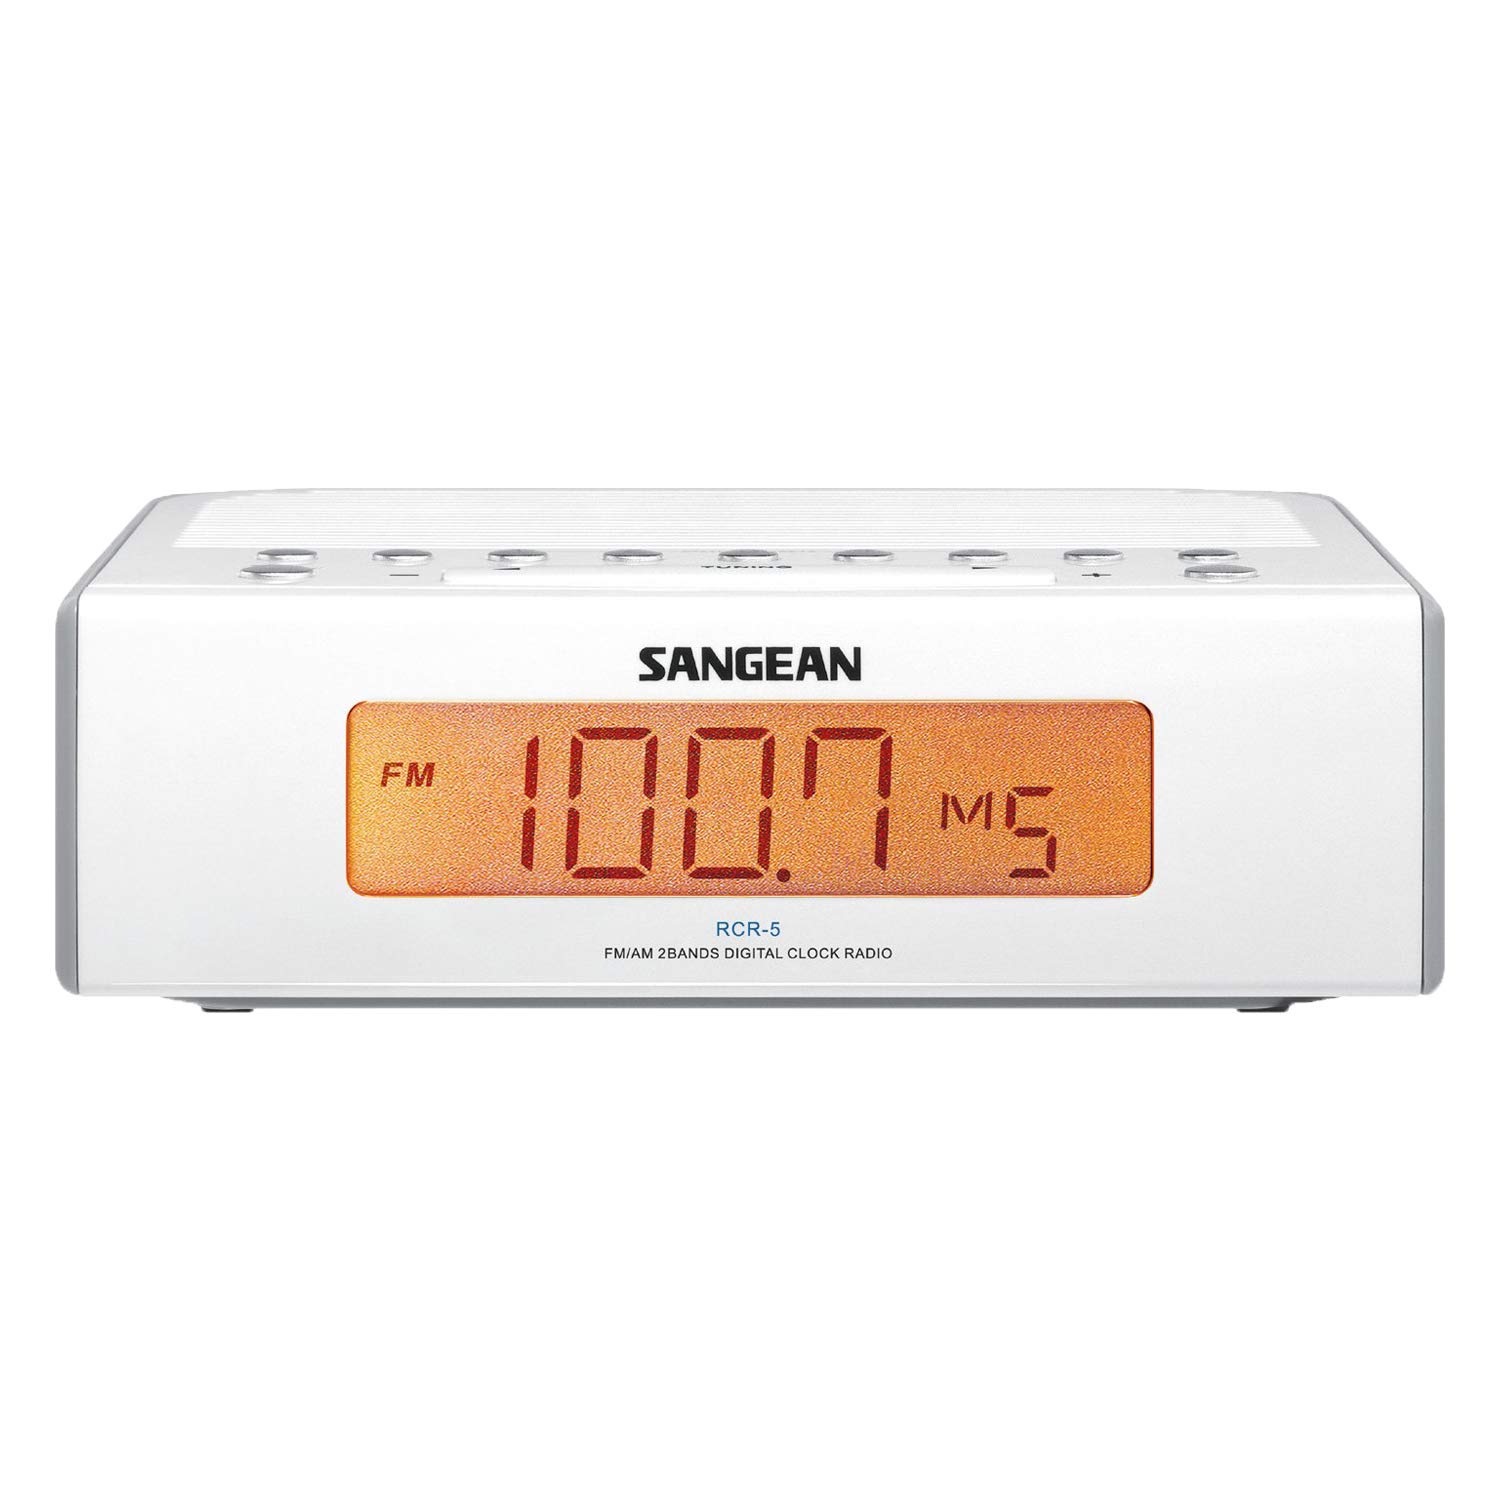 Sangean RCR-5 Digital AM/FM Double Alarm Clock Radio